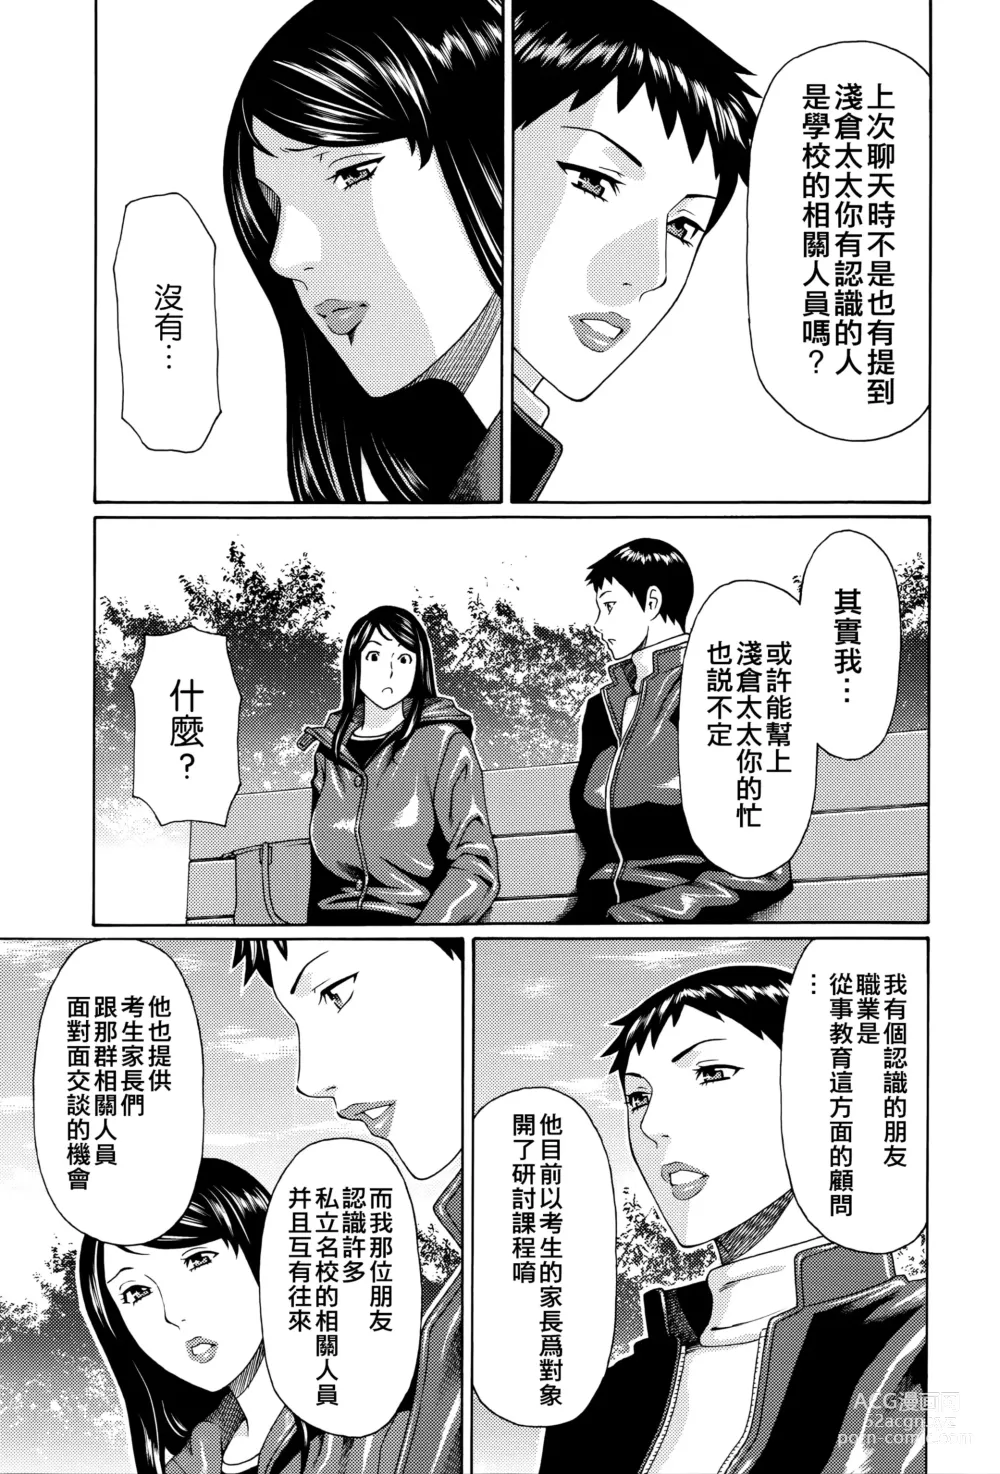 Page 12 of manga Mumyou no Uzu